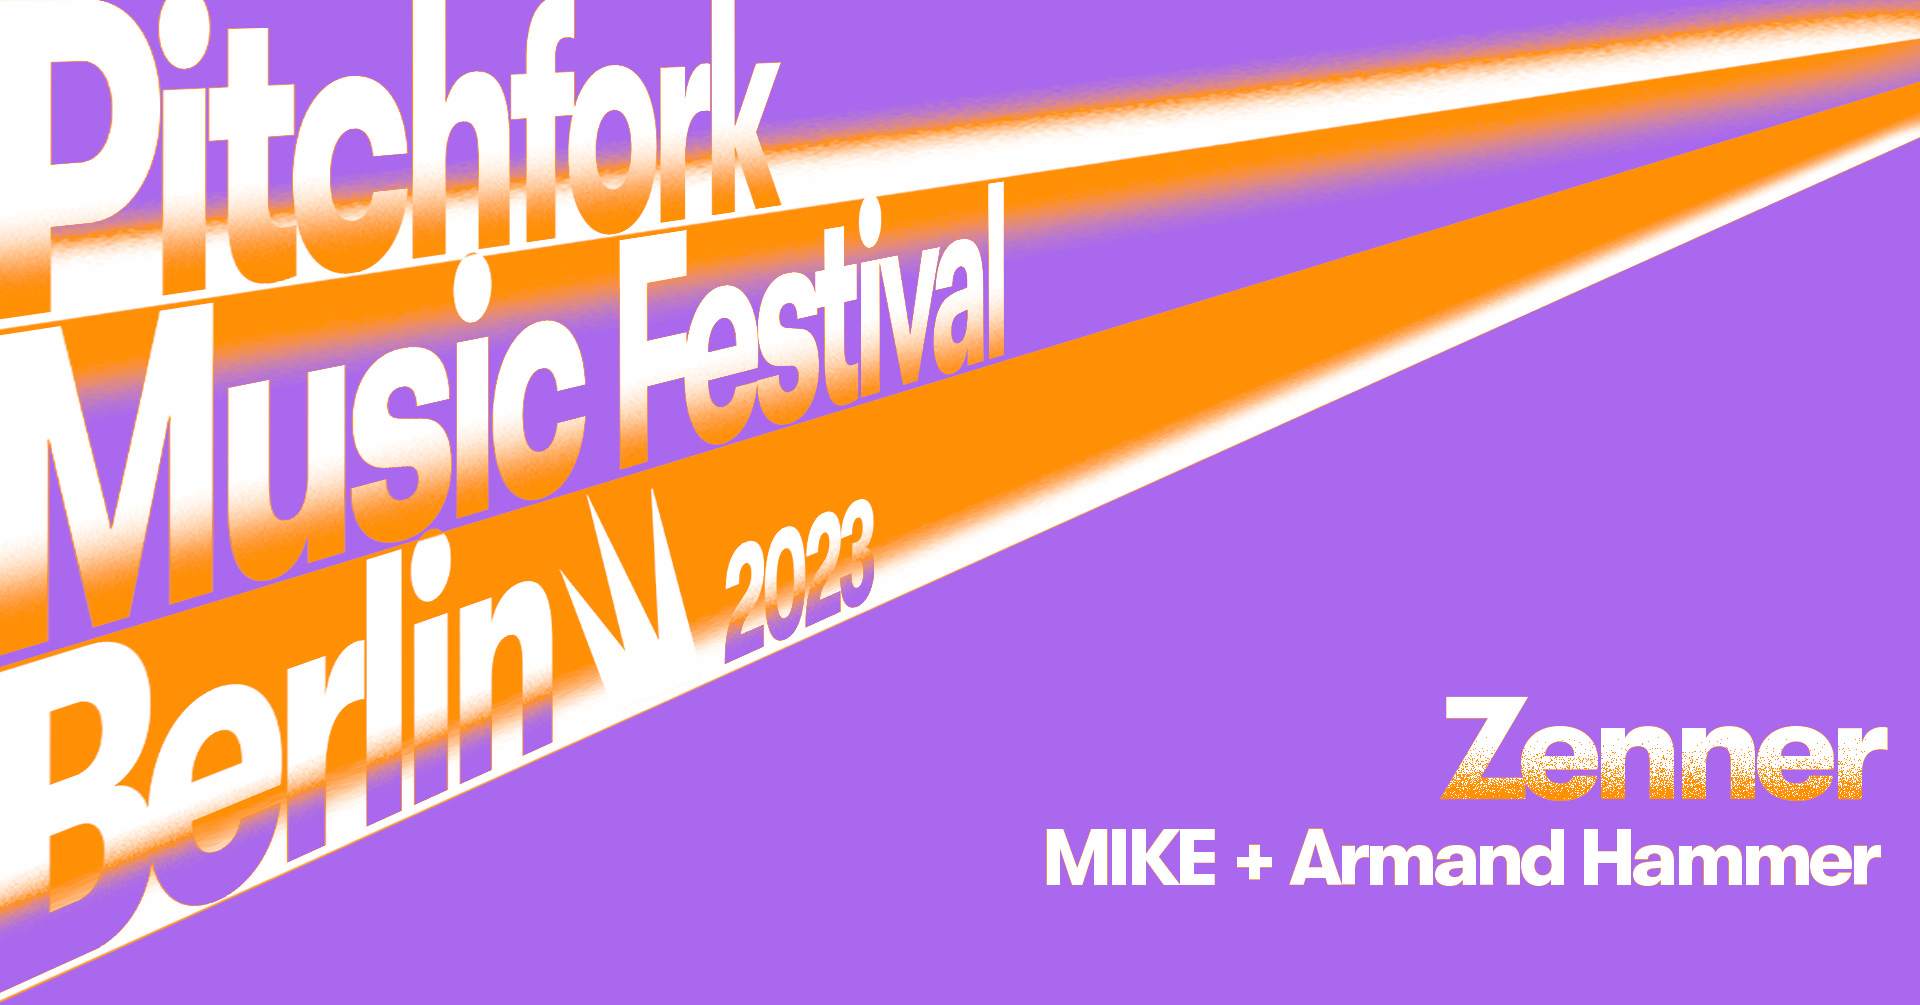 MIKE • Armand Hammer - Pitchfork Music Festival Berlin - Página frontal